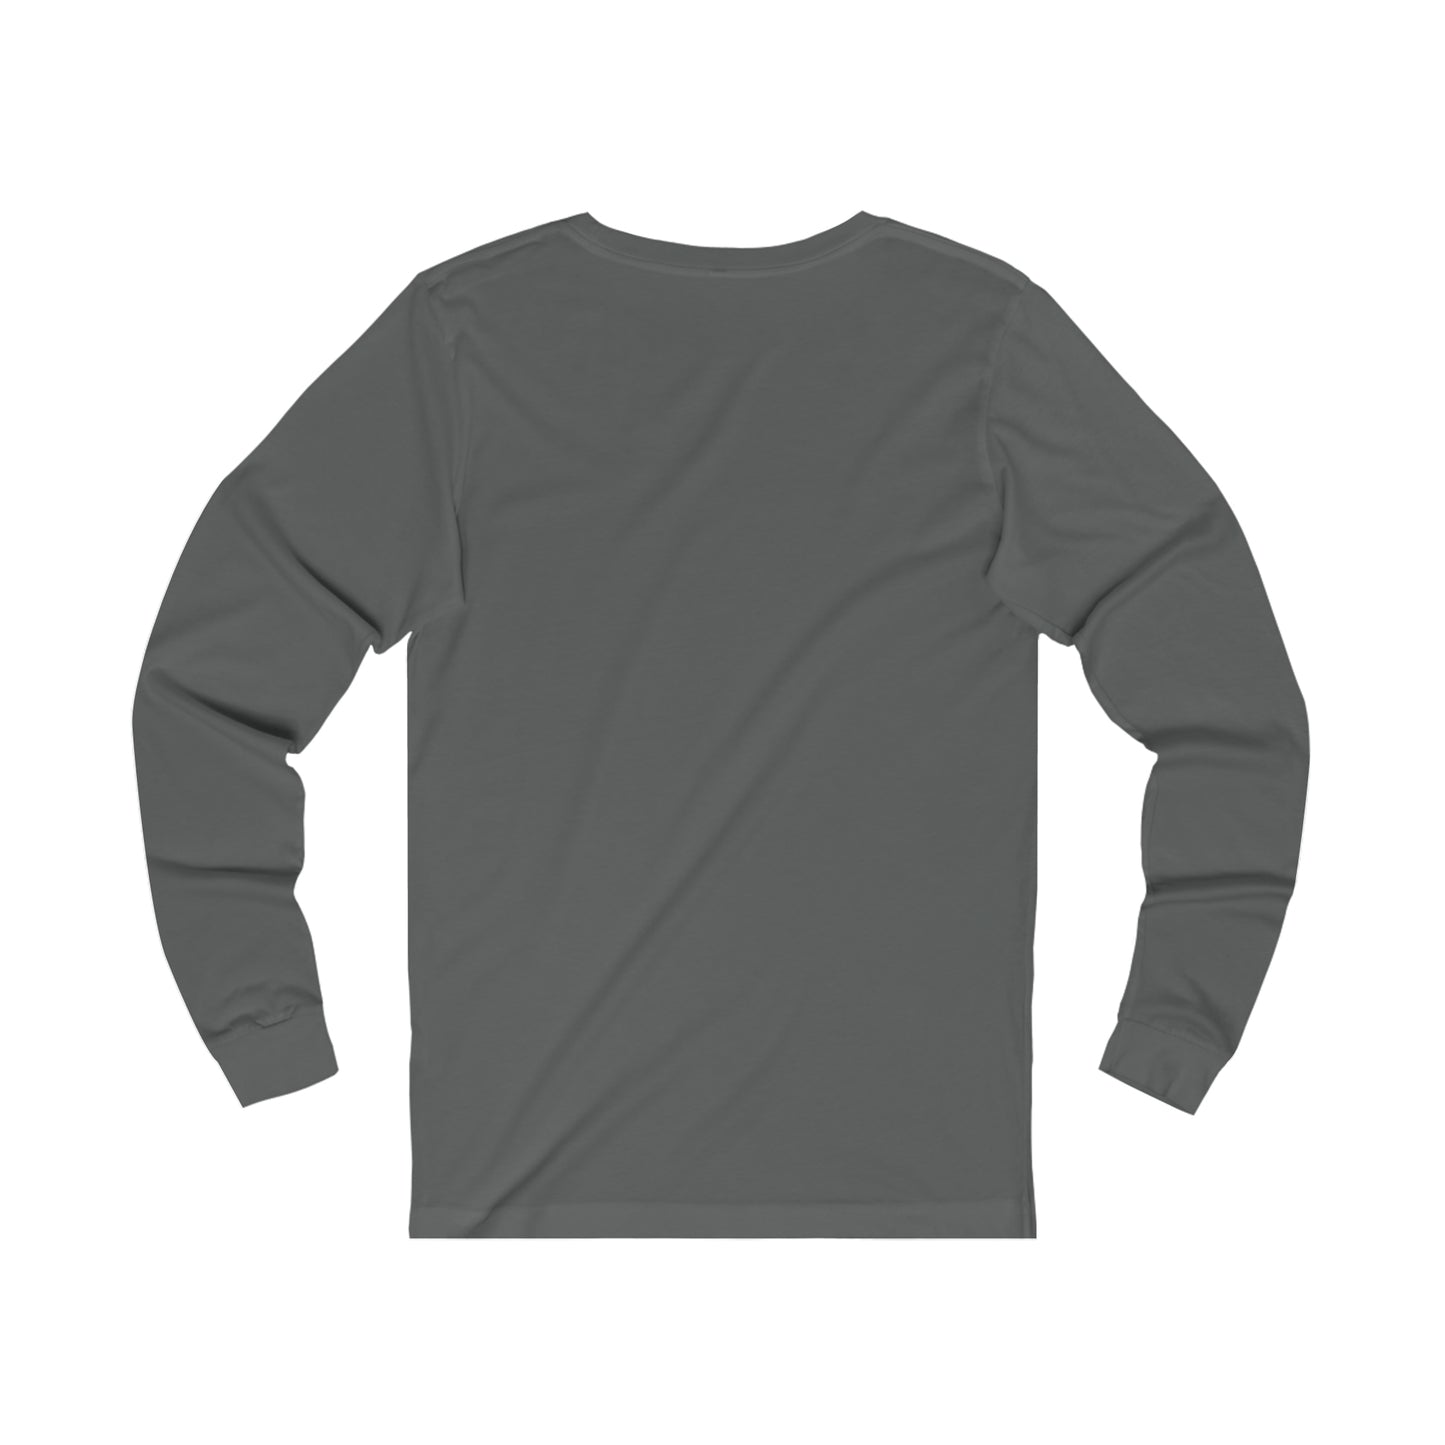 Colourful Spiderweb - Unisex Long Sleeve T-Shirt